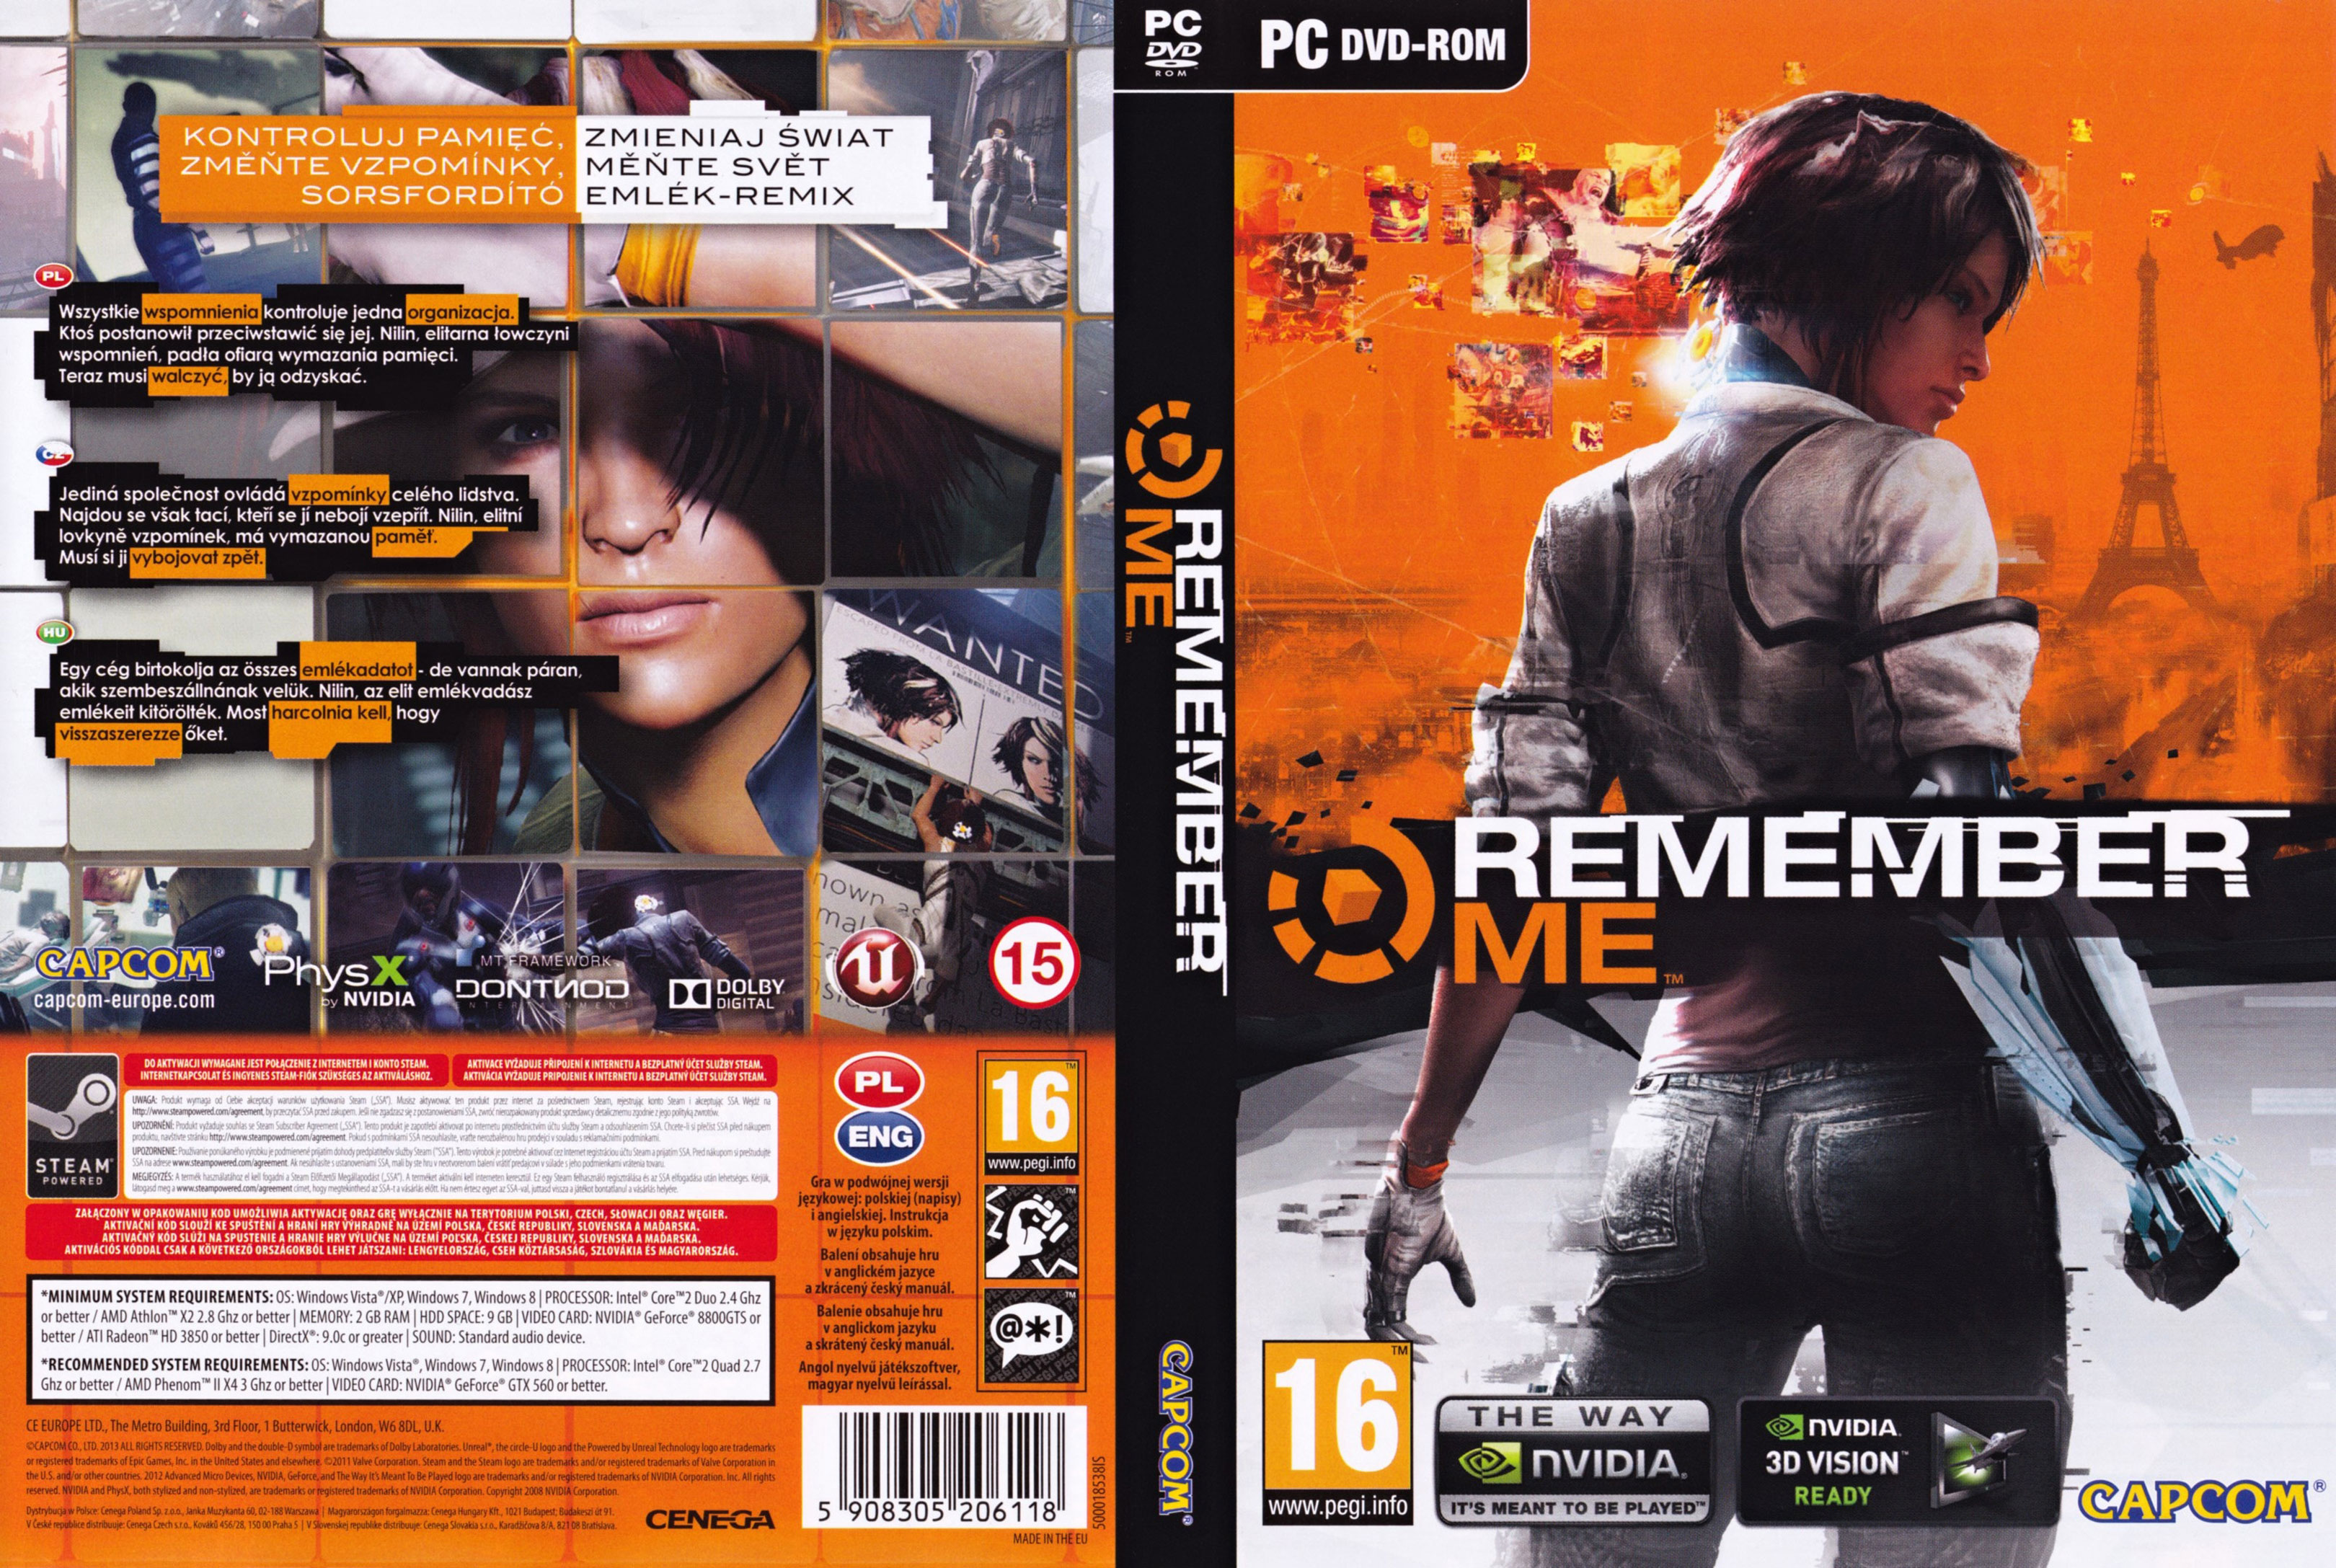 Актуальное зеркало remember remember game. Remember me игра ps3. Нилин ремембер ми. Remember me игра 2013. PLAYSTATION 3 remember me.